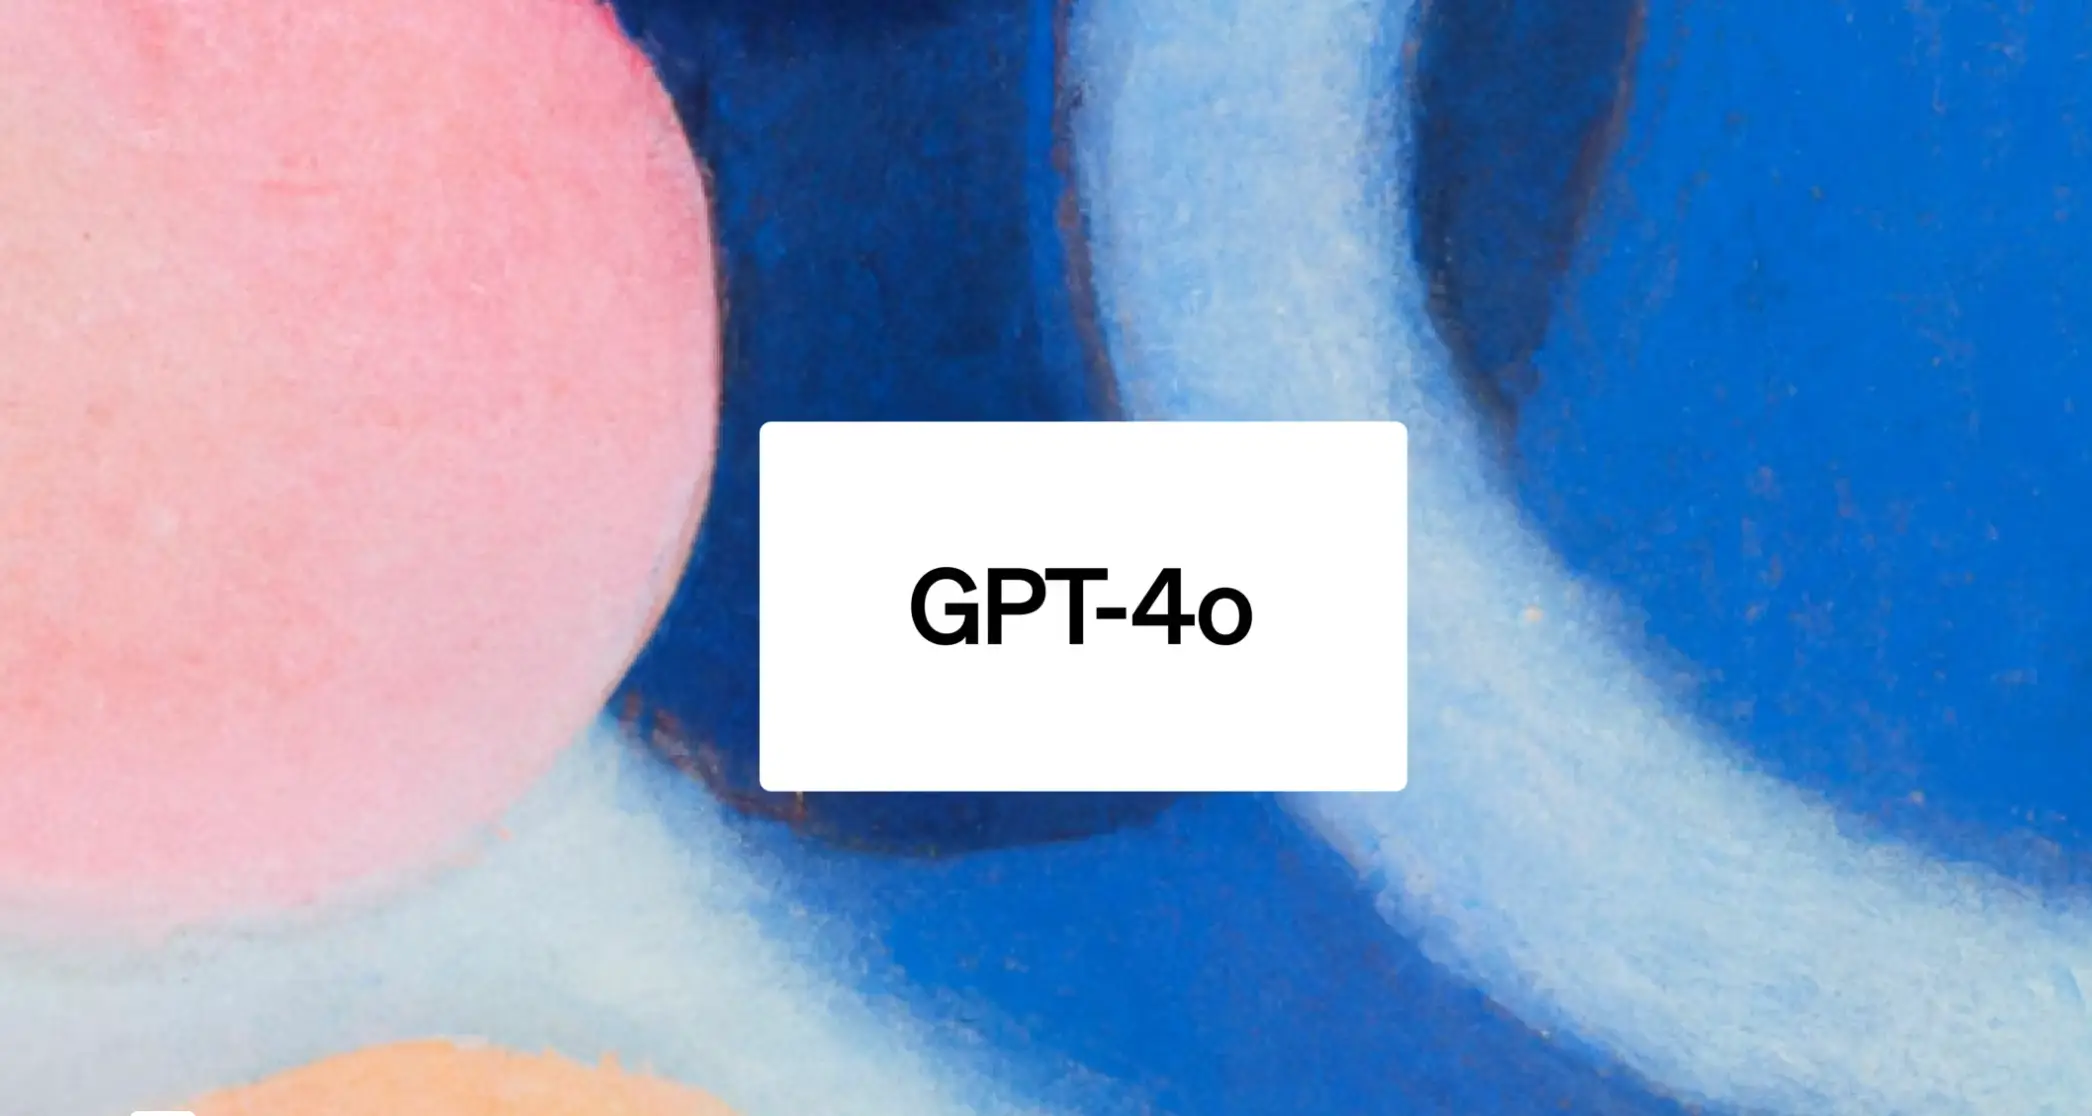 Imagen alusiva a GPT-4o